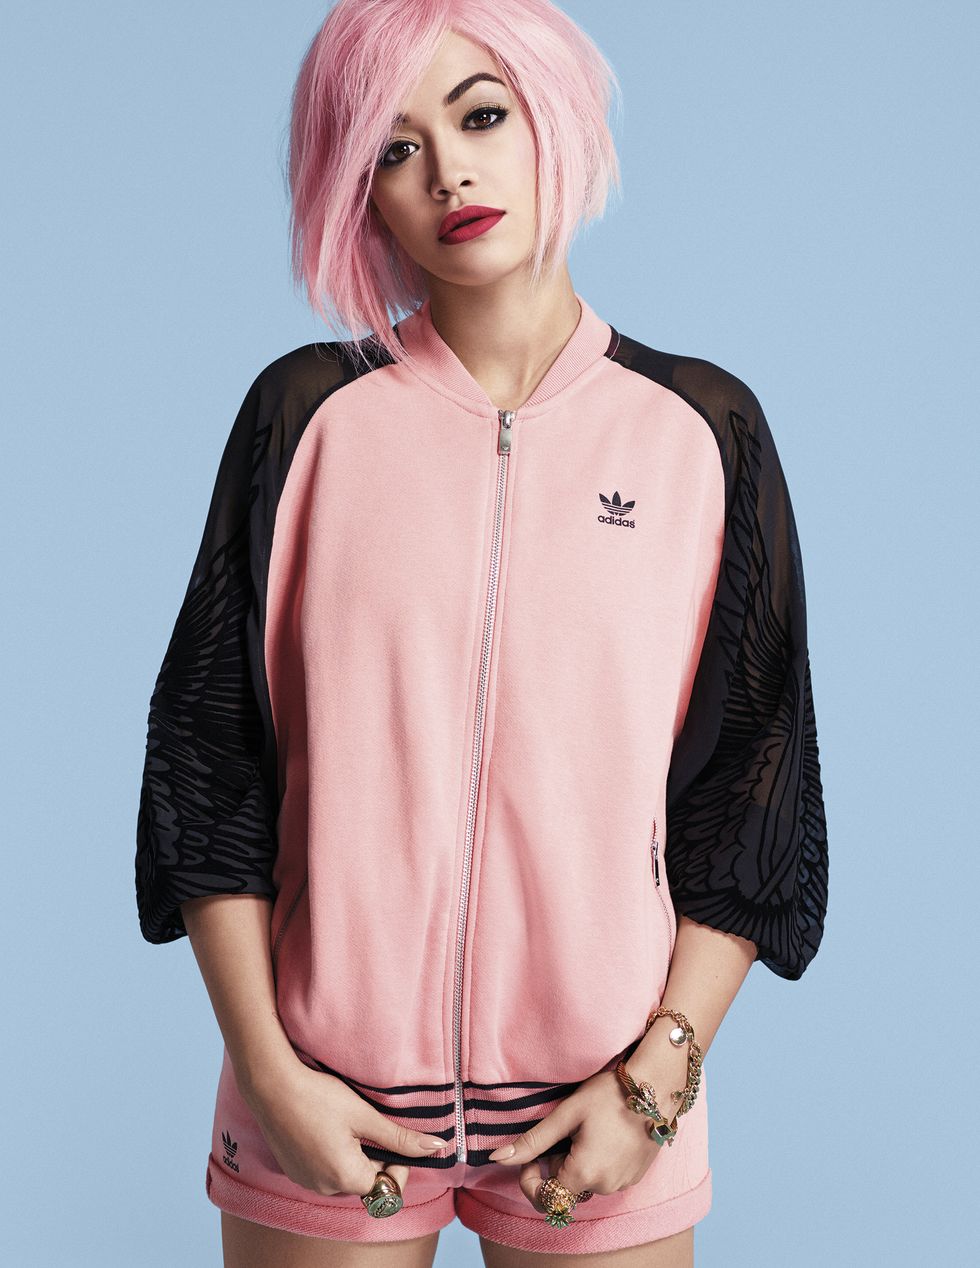 Rita Ora modelling her Adidas Originals collection